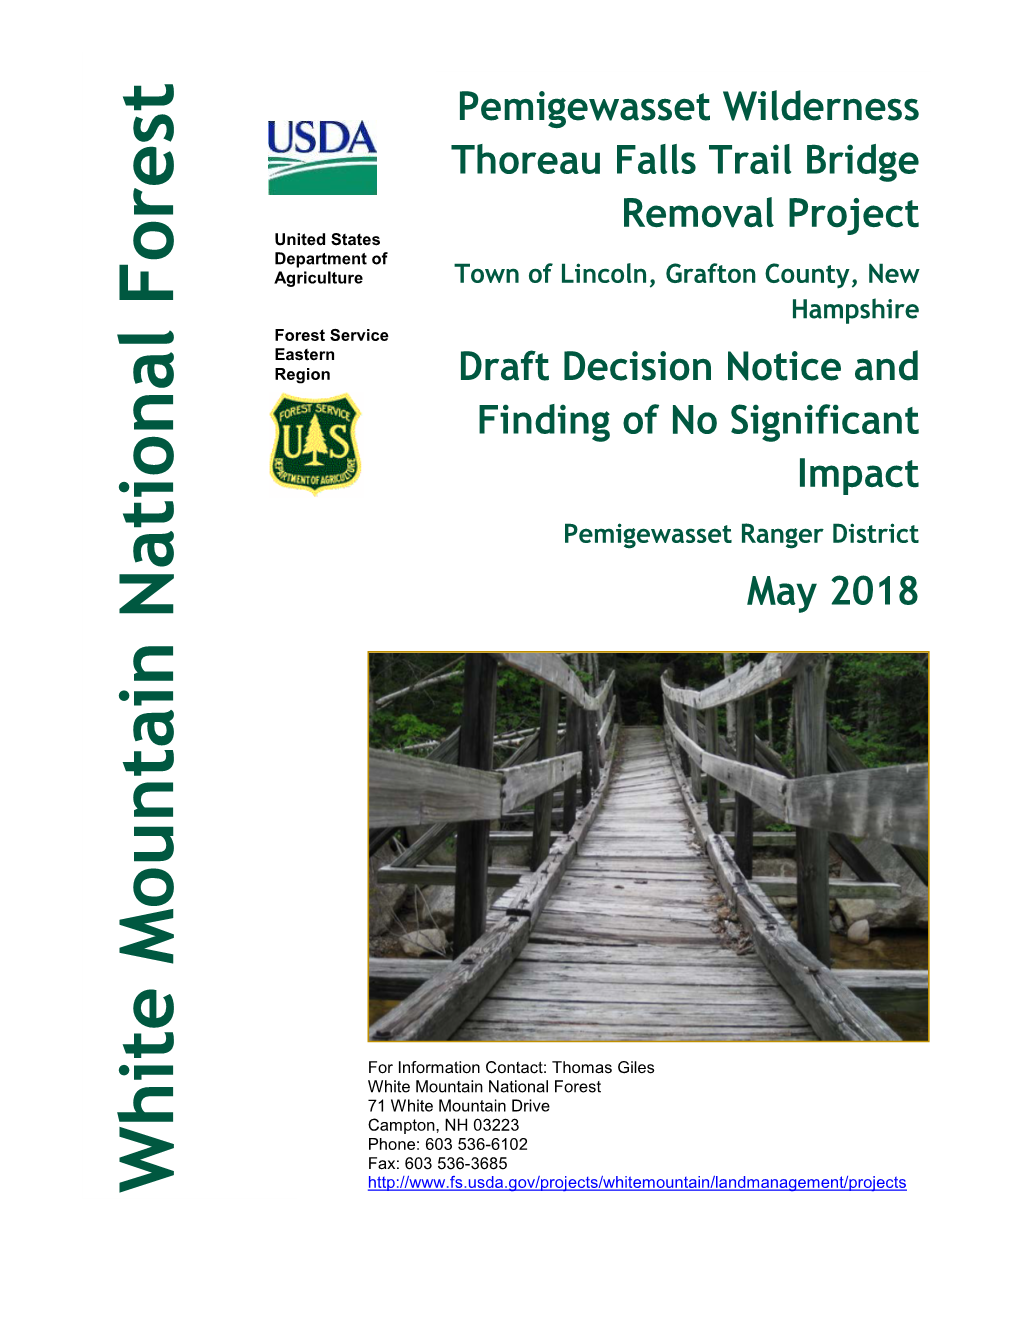 Pemigewasset Wilderness Thoreau Falls Trail Bridge Removal Project